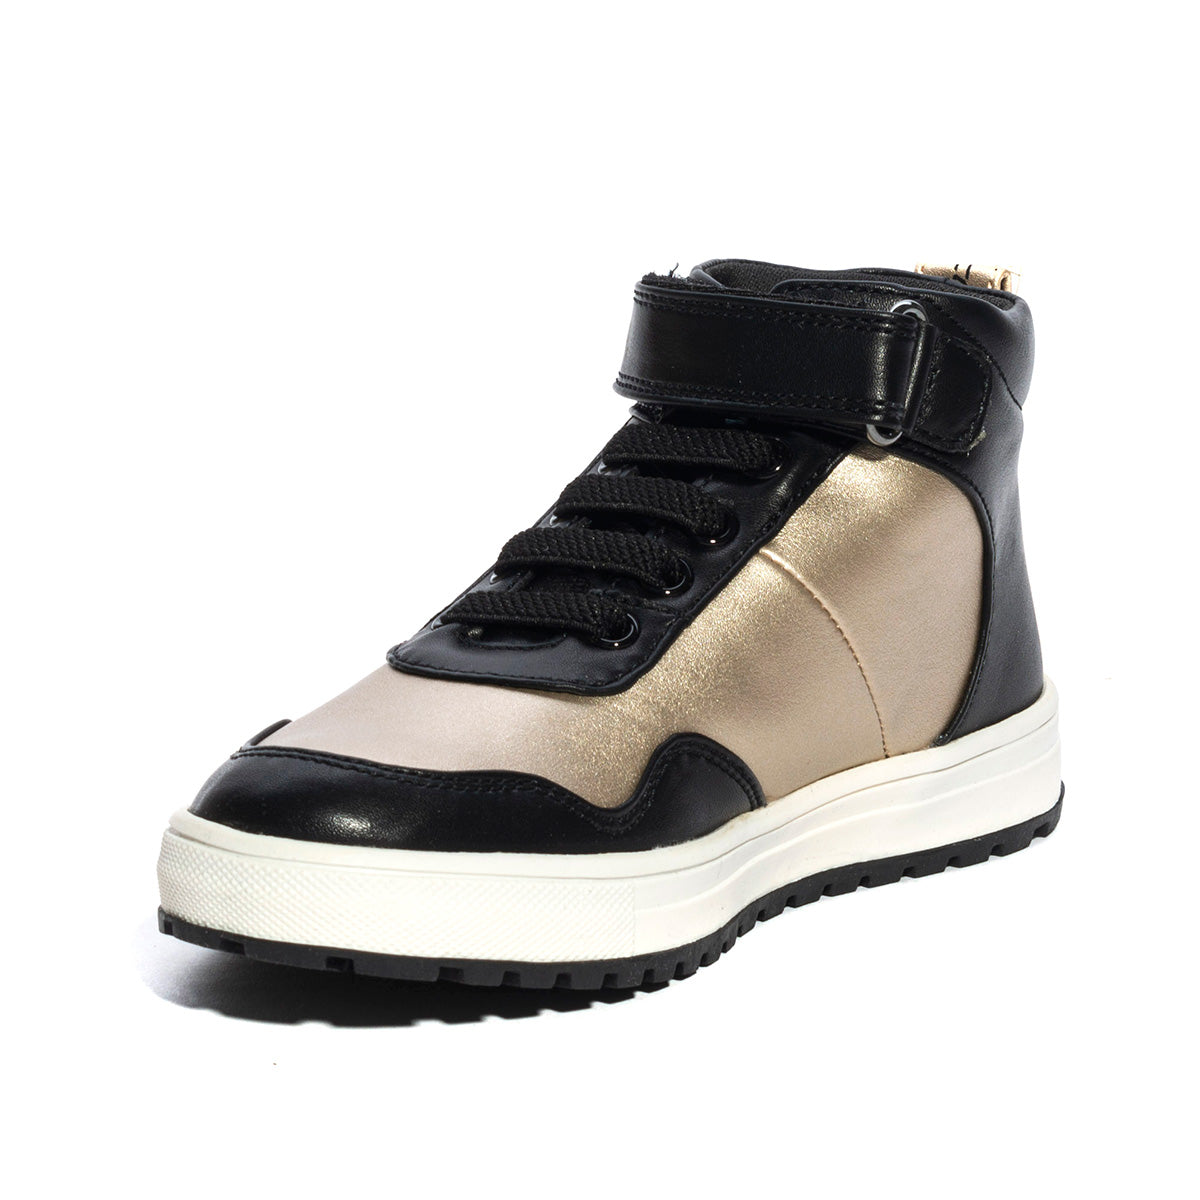 Sneakers BALDUCCI BS3784 Nero